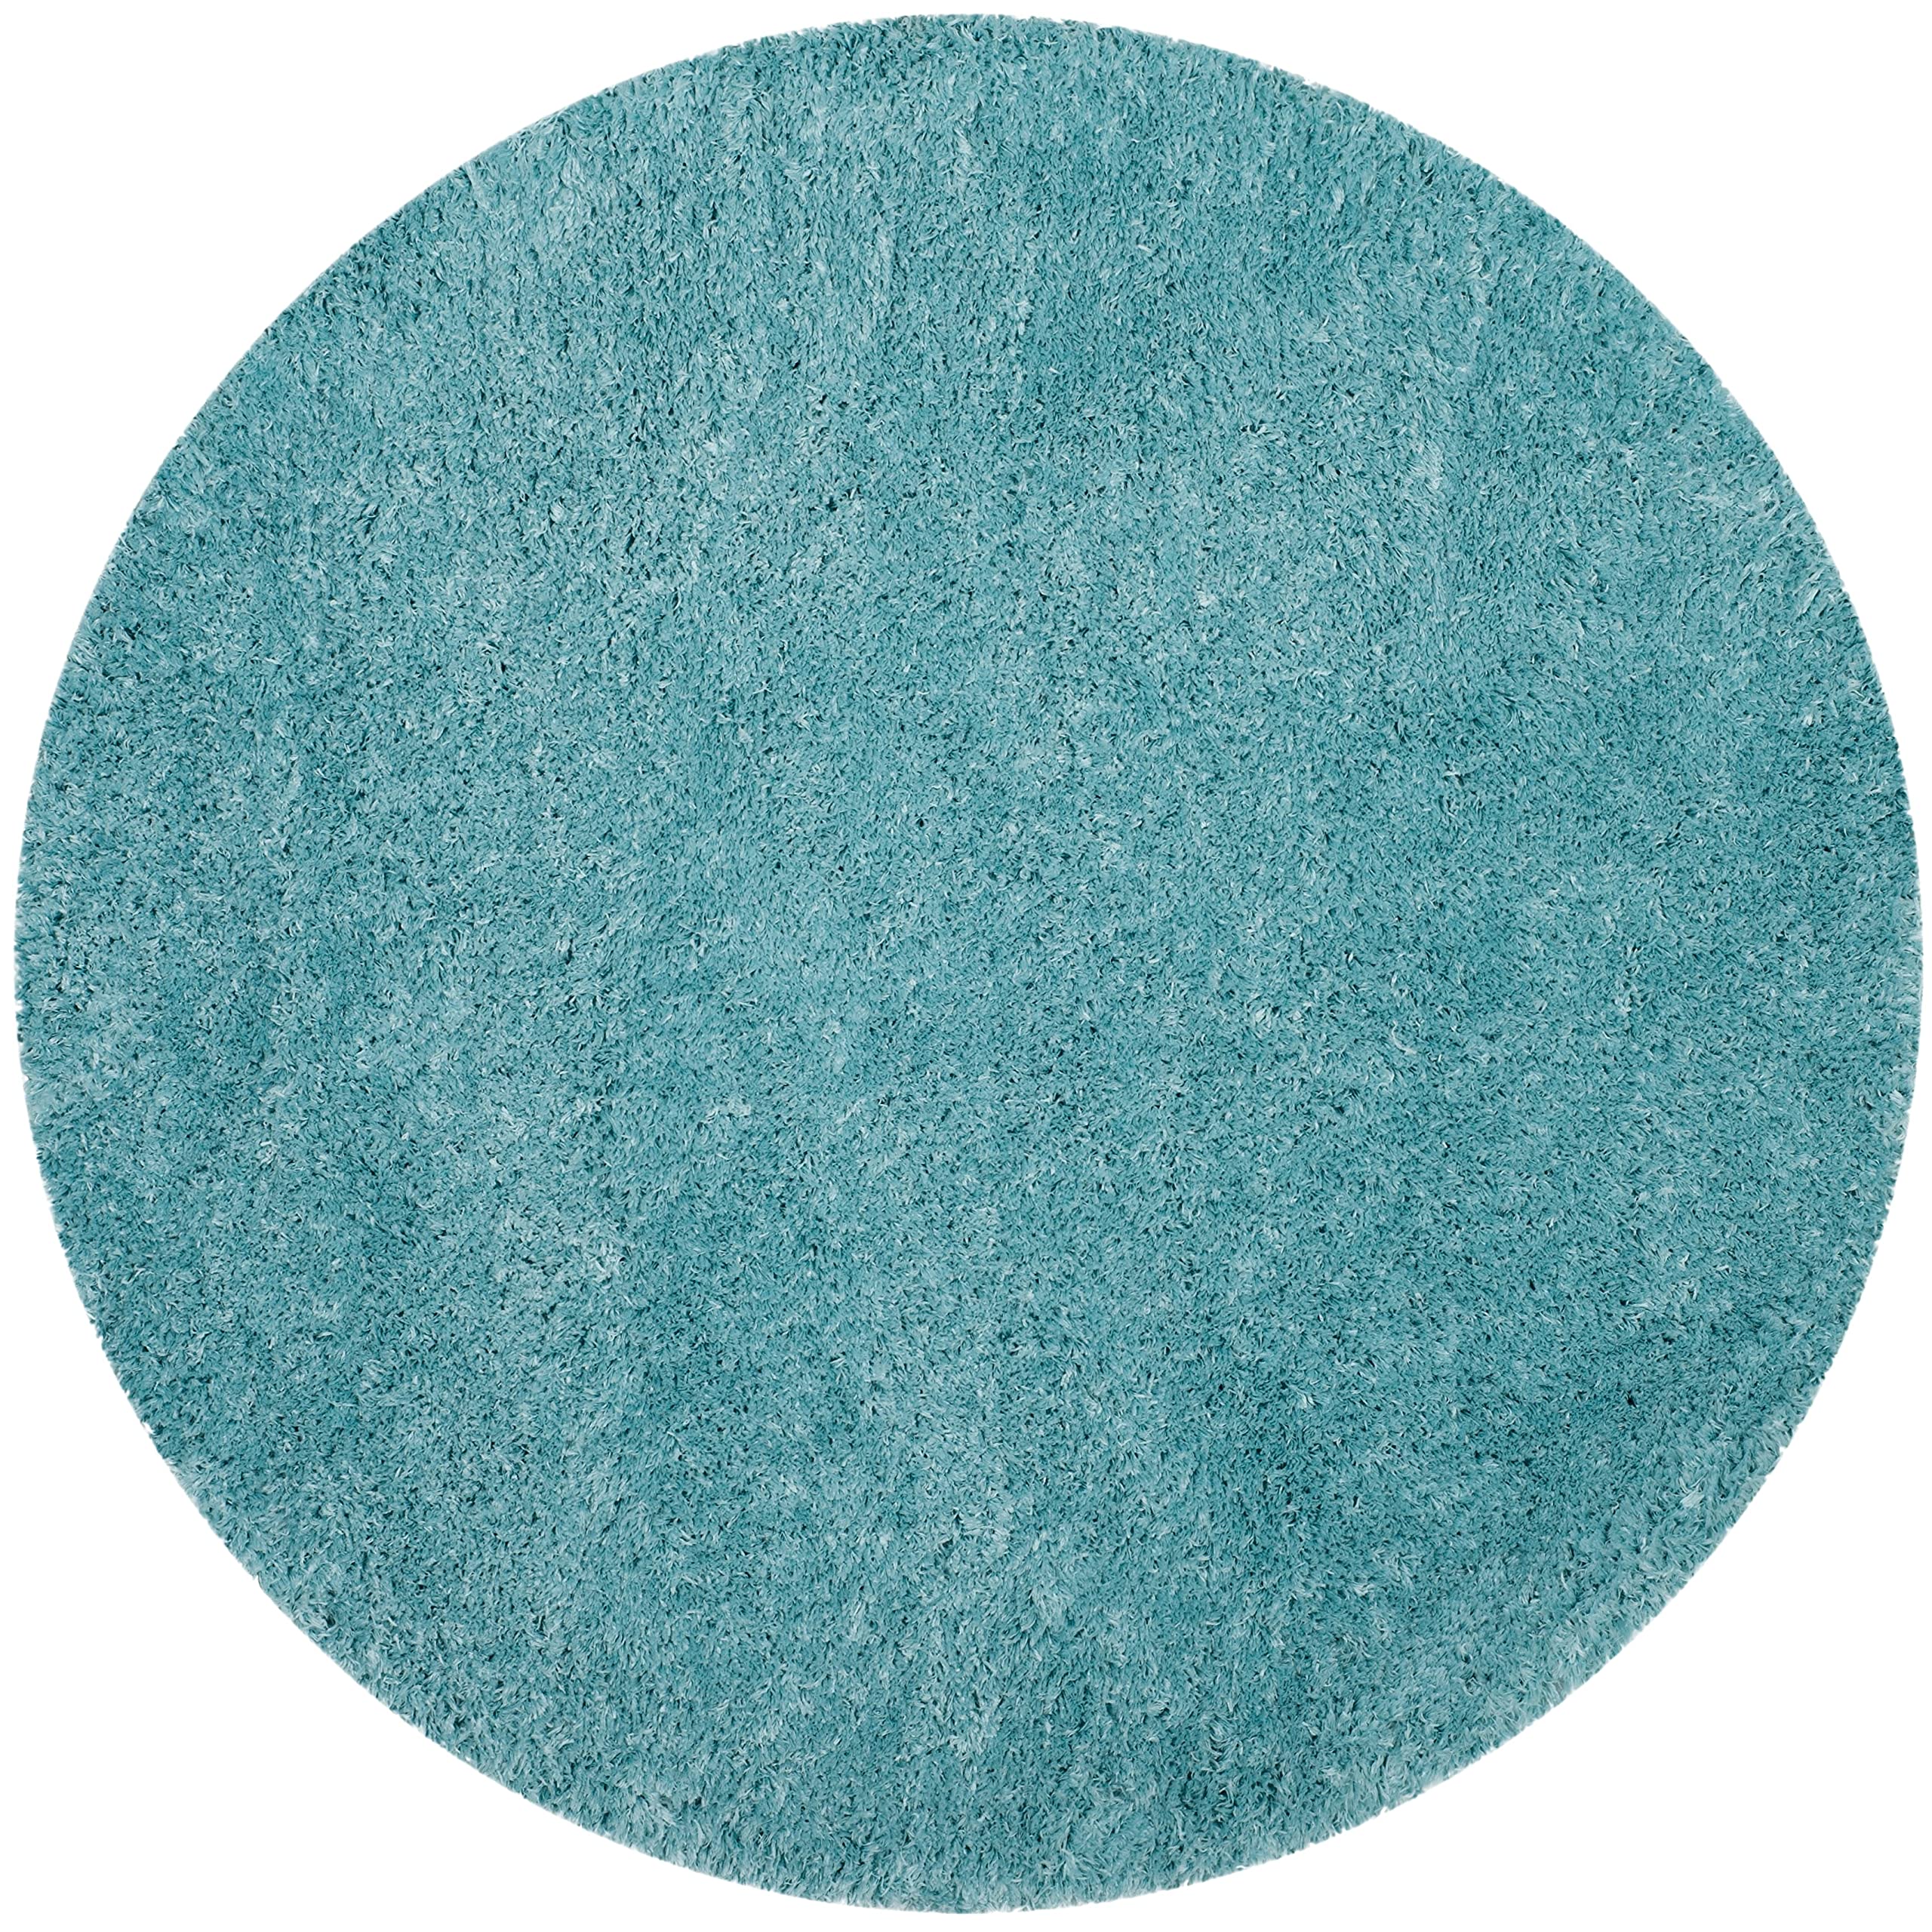 Safavieh Polar Shag 系列小地毯 - 5 英尺 1 英尺圆形，浅绿松石色，纯色迷人设计，不脱...